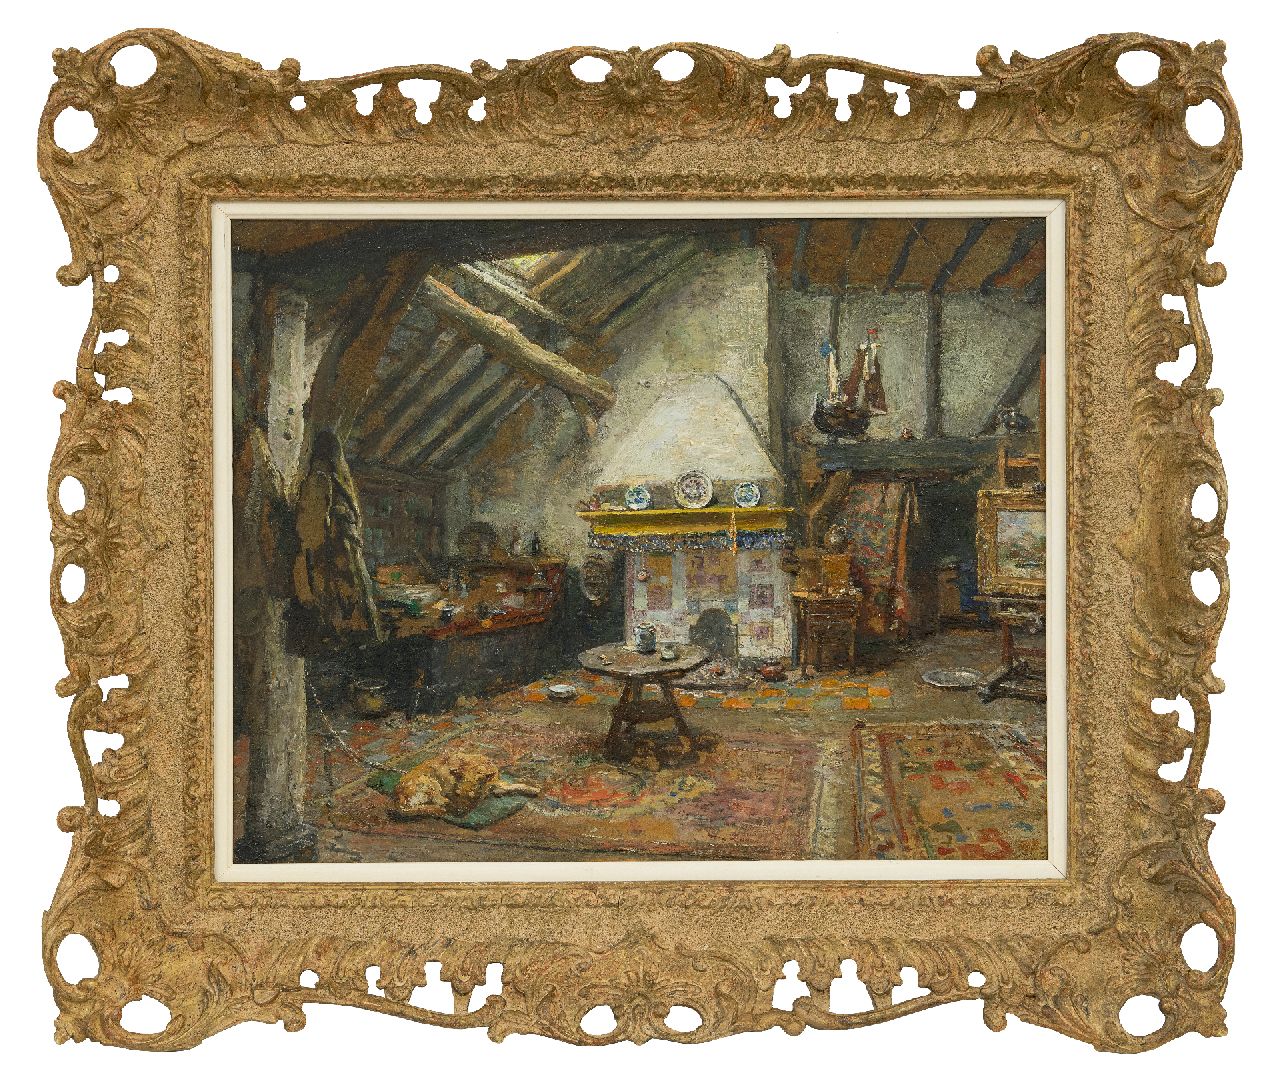 Briët A.H.C.  | 'Arthur' Henri Christiaan Briët | Paintings offered for sale | The studio of the painter Frans Langeveld, oil on paper laid down on panel 35.2 x 43.7 cm, signed l.r.